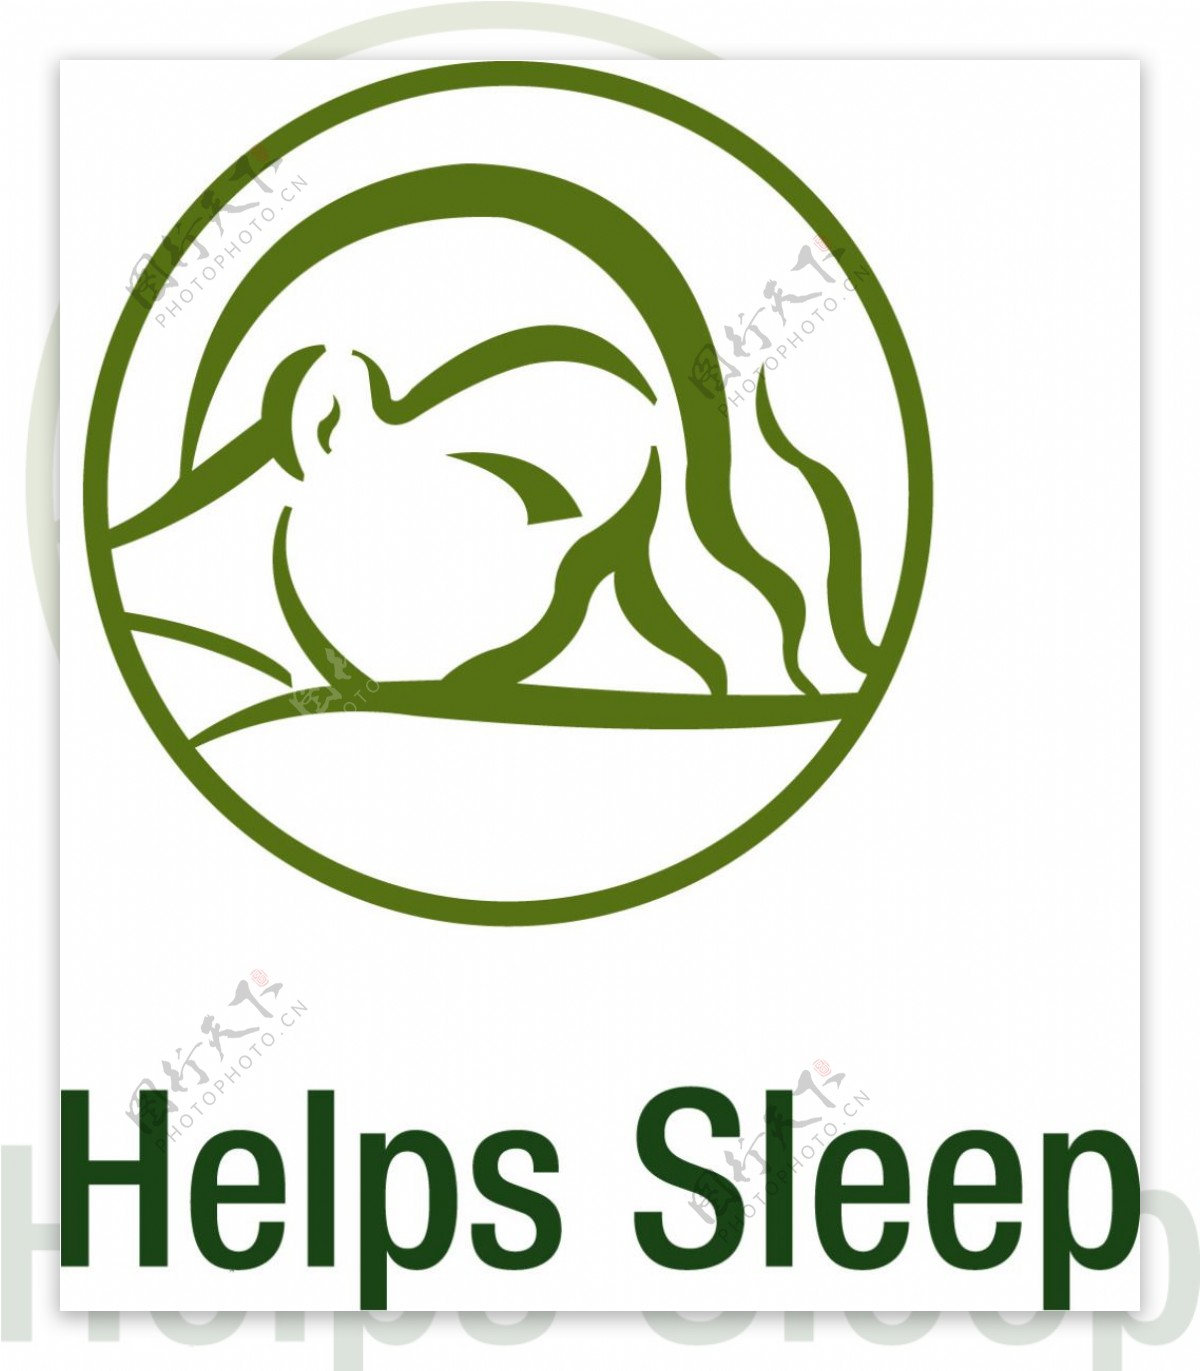 HelpsSleep帮助睡眠图片